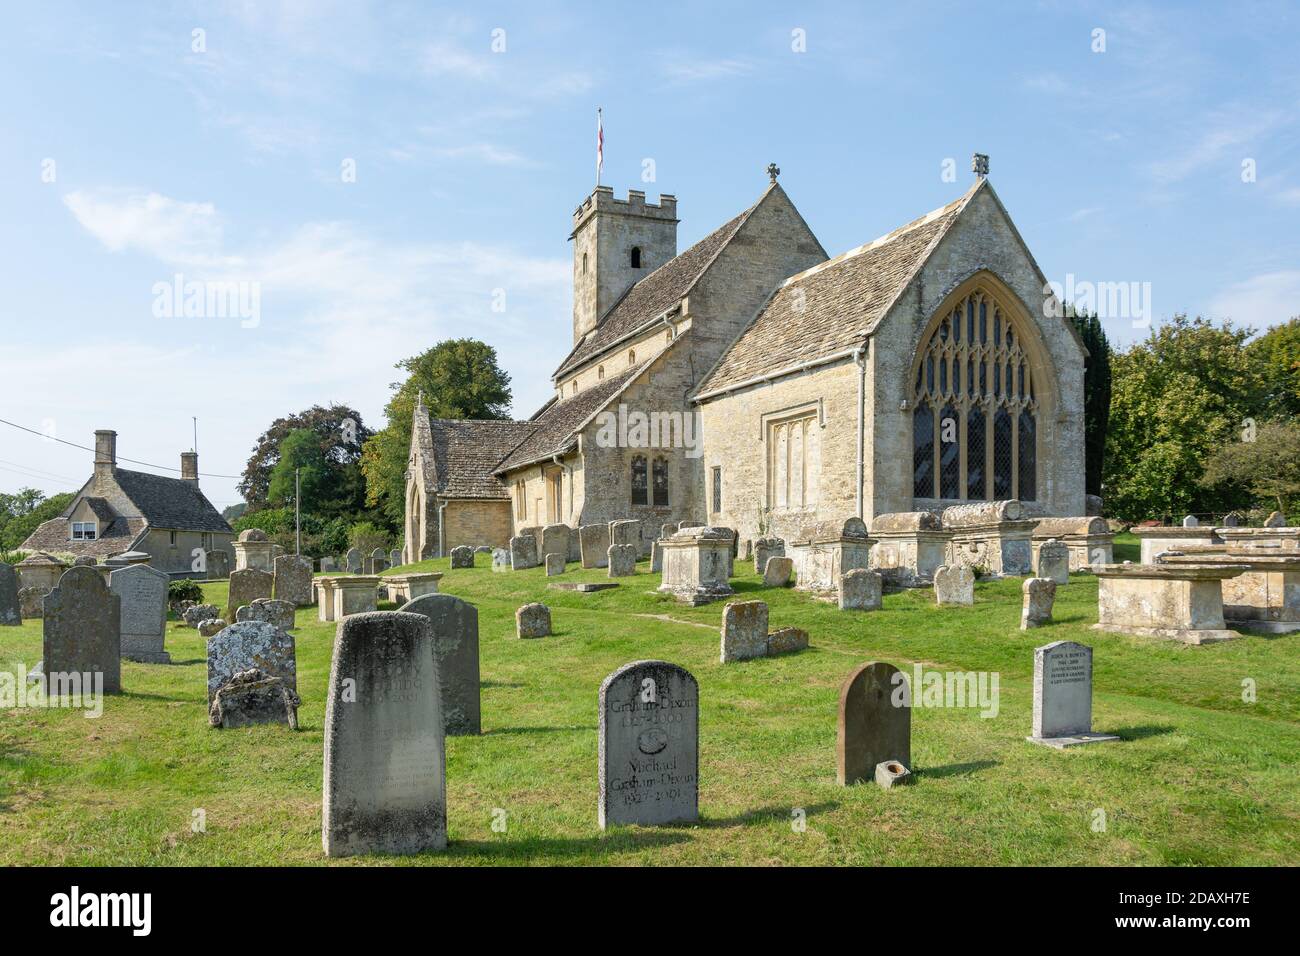 St Mary's Church, Pebble Court, Swinbrook, Oxfordshire, England, United Kingdom Stock Photo